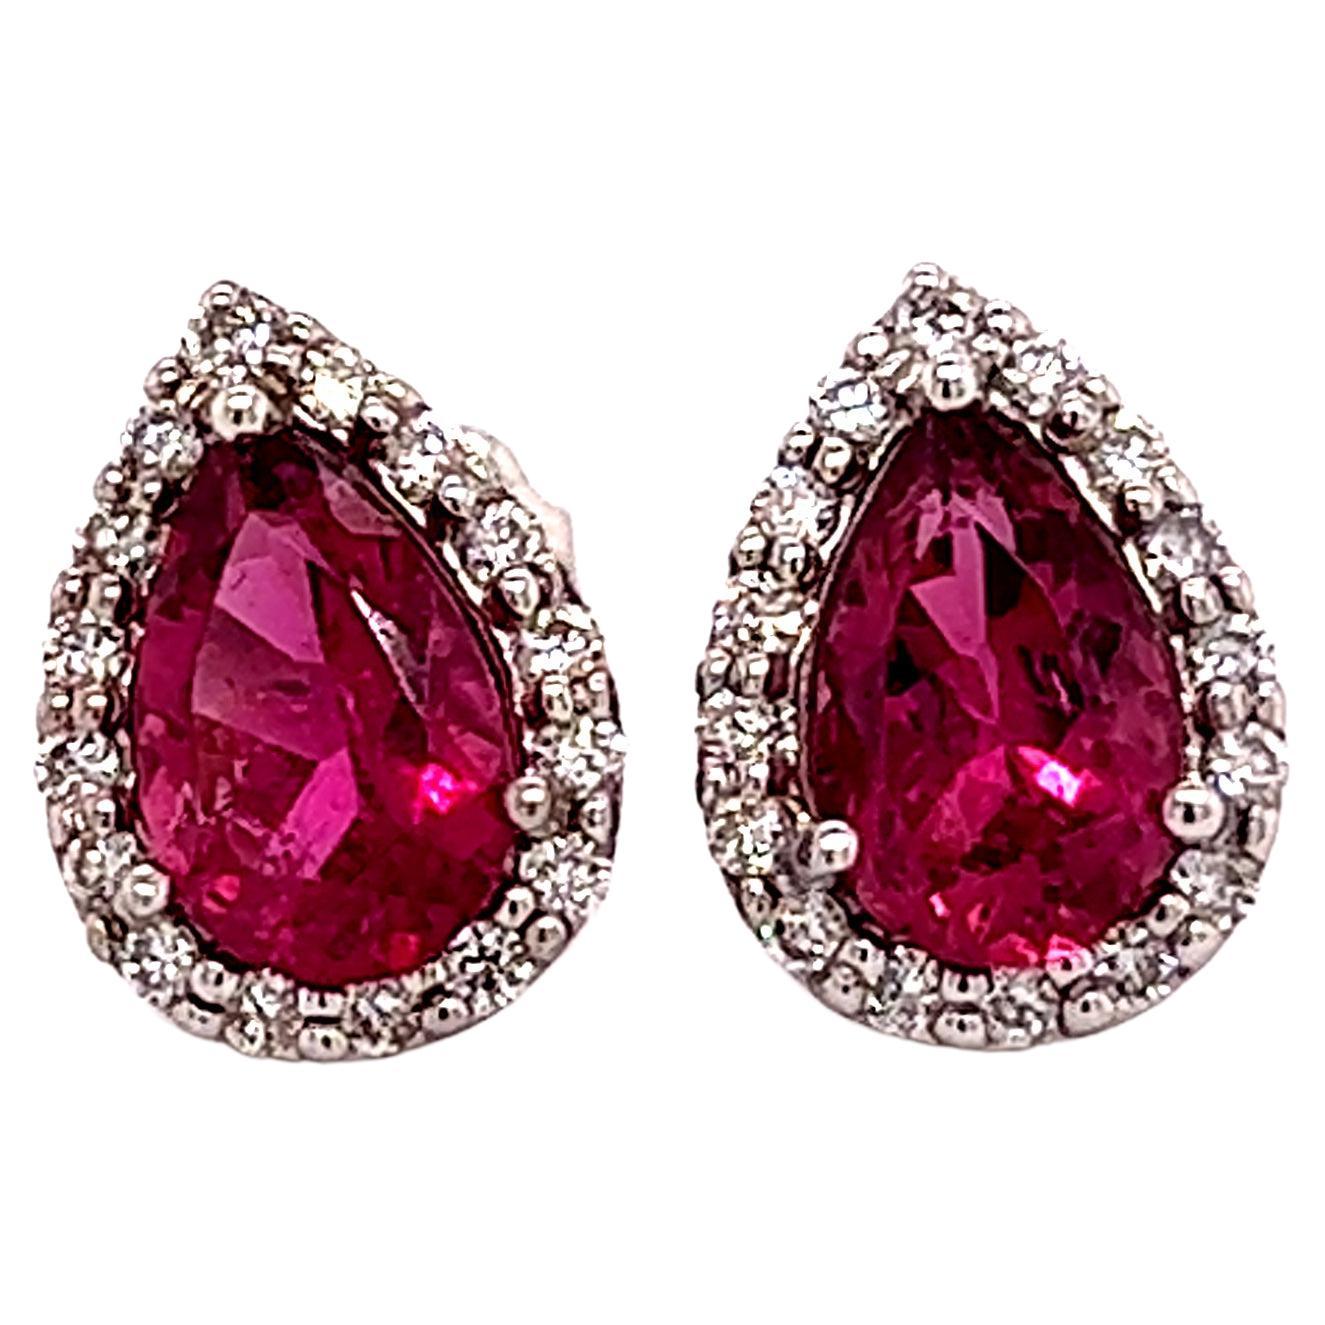 Natural Pink Tourmaline Diamond Stud Earrings 14k W Gold 2.02 TCW Certified